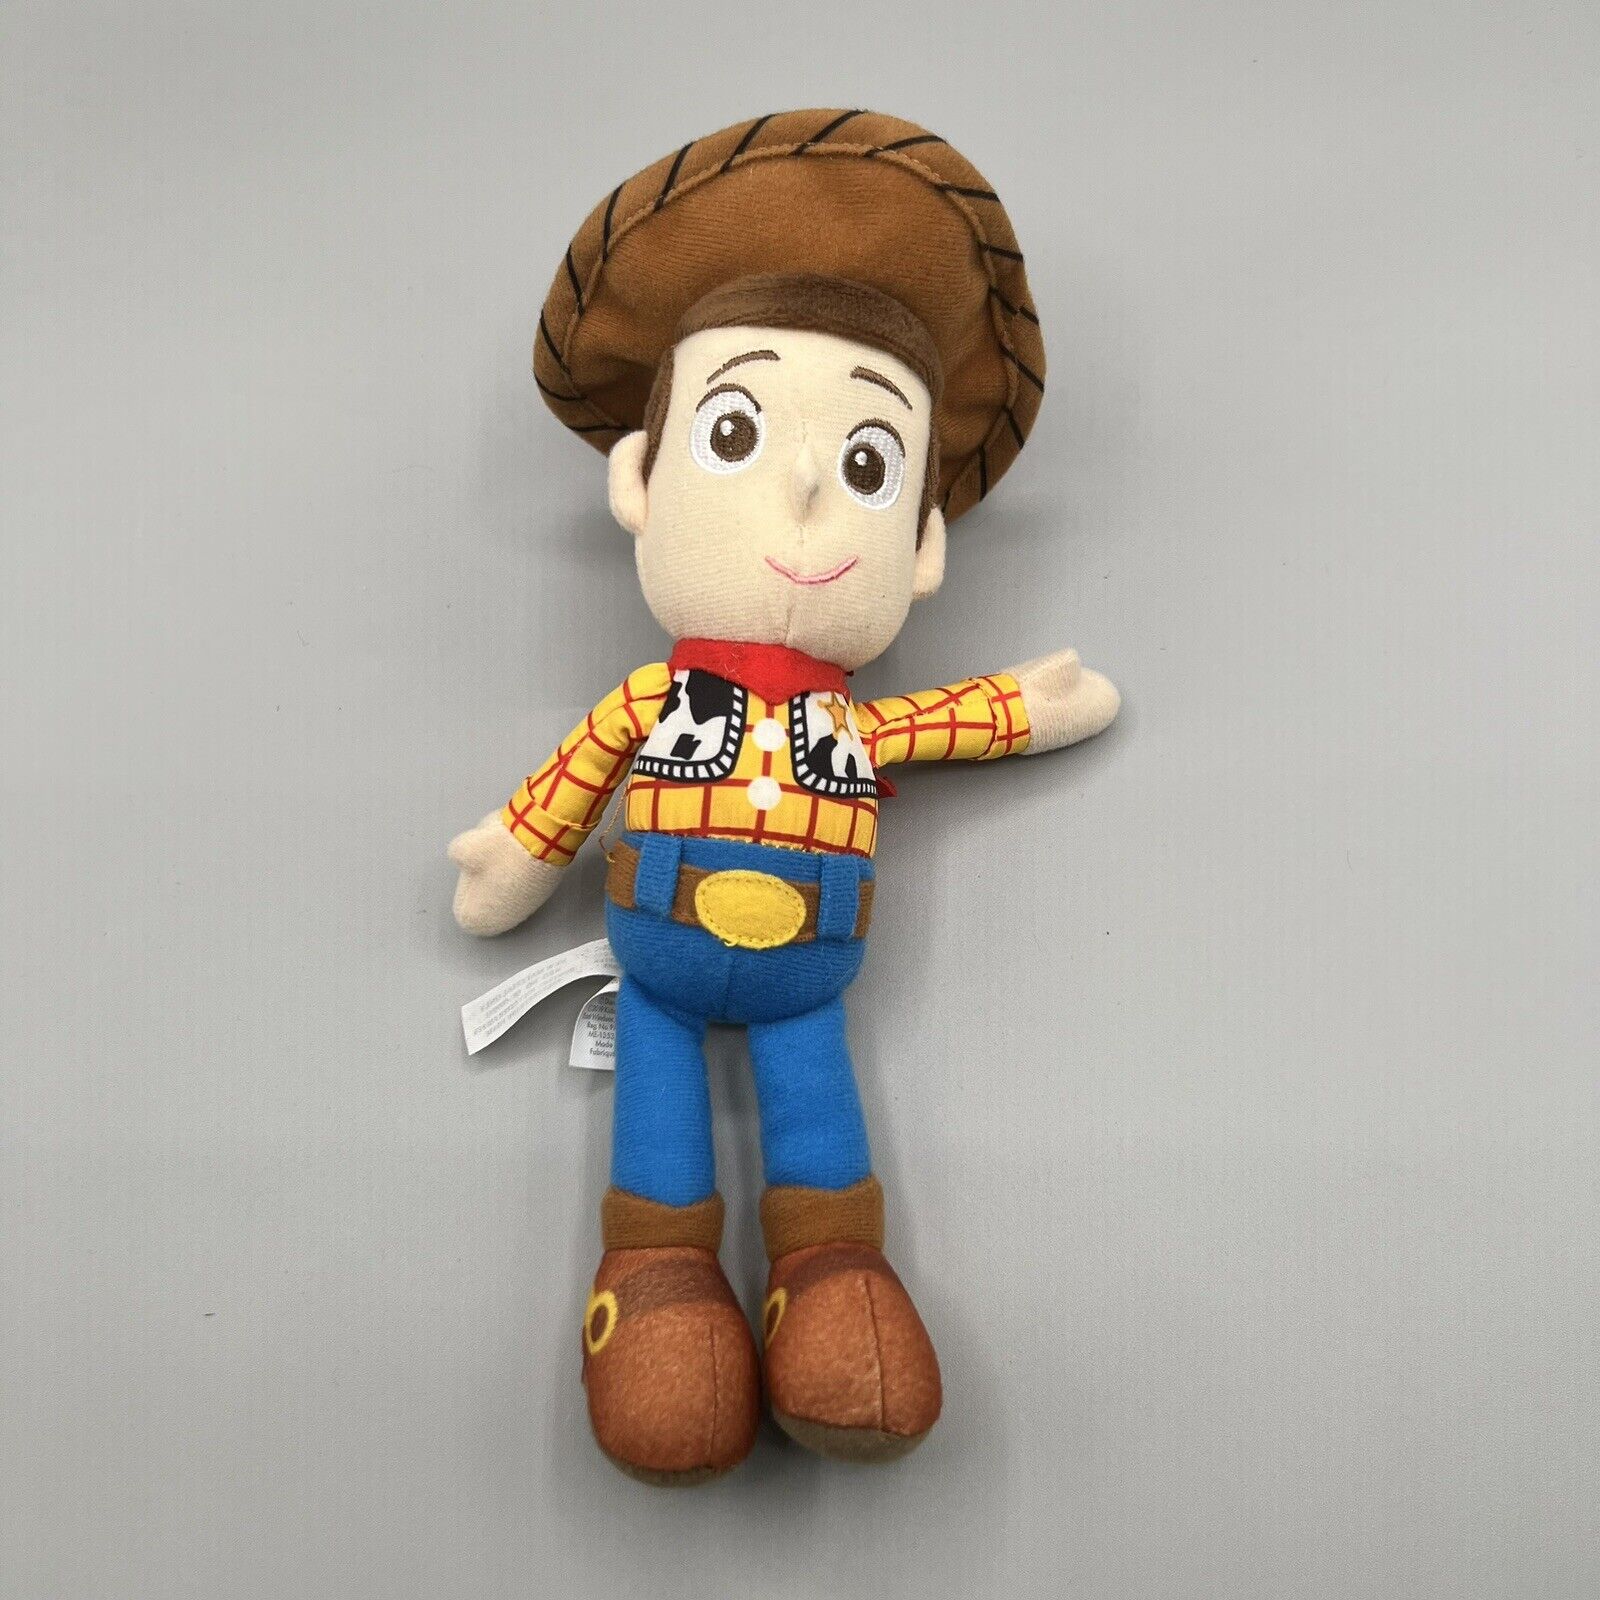 Disney Baby Pixar Toy Story Woody 2019 Cowboy Stuffed Plush 9”